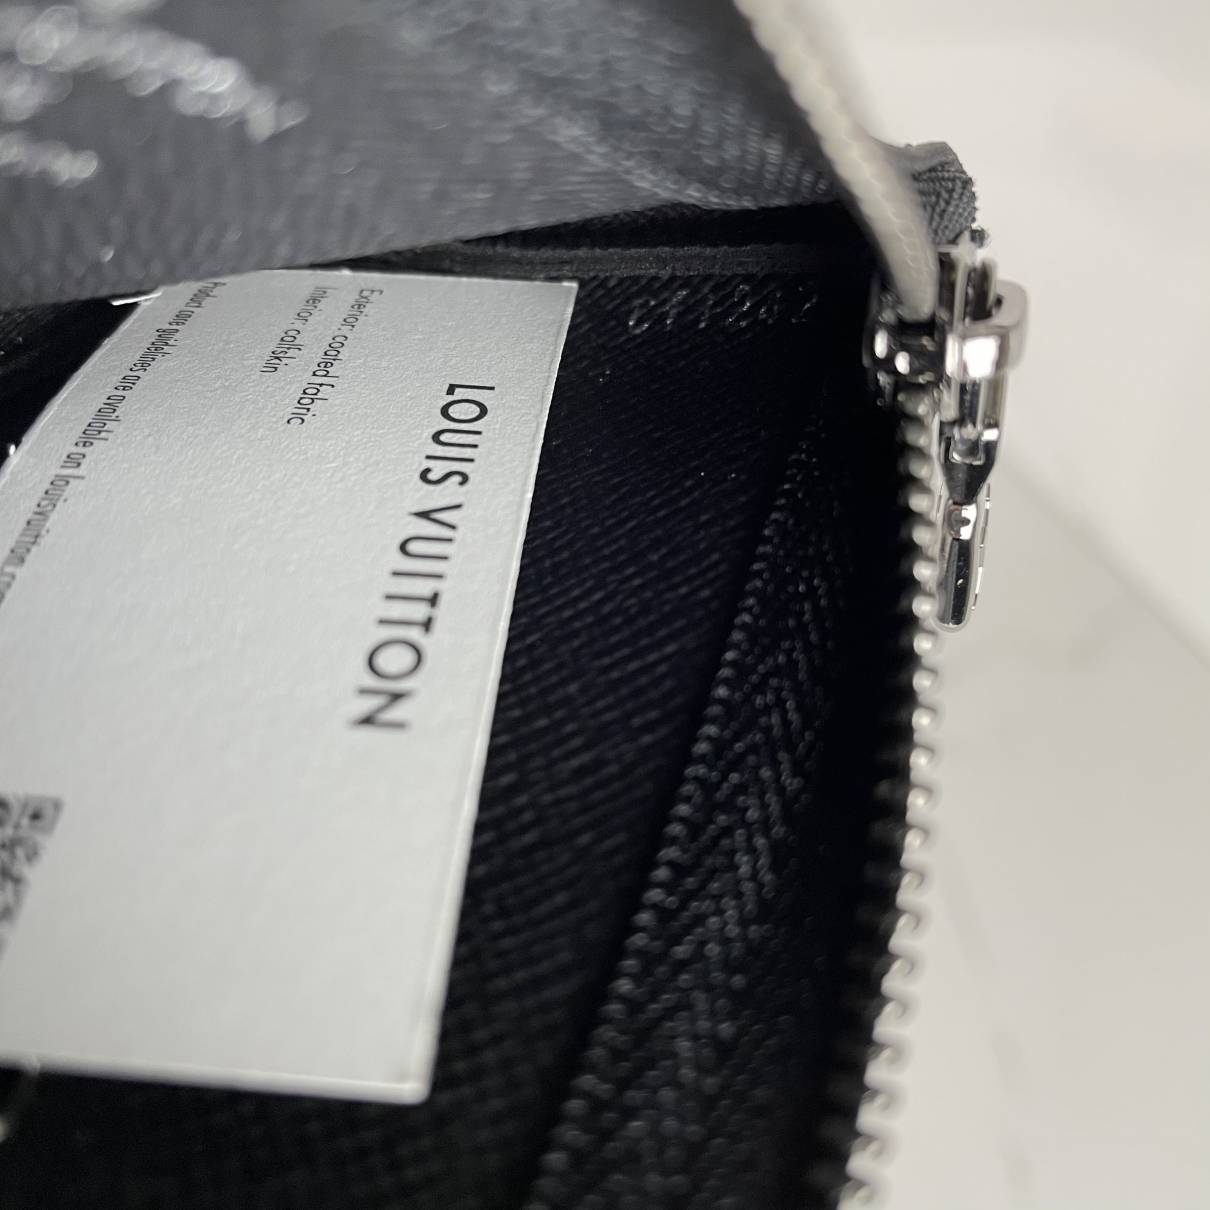 Key pouch cloth small bag Louis Vuitton Black in Cloth - 25259710